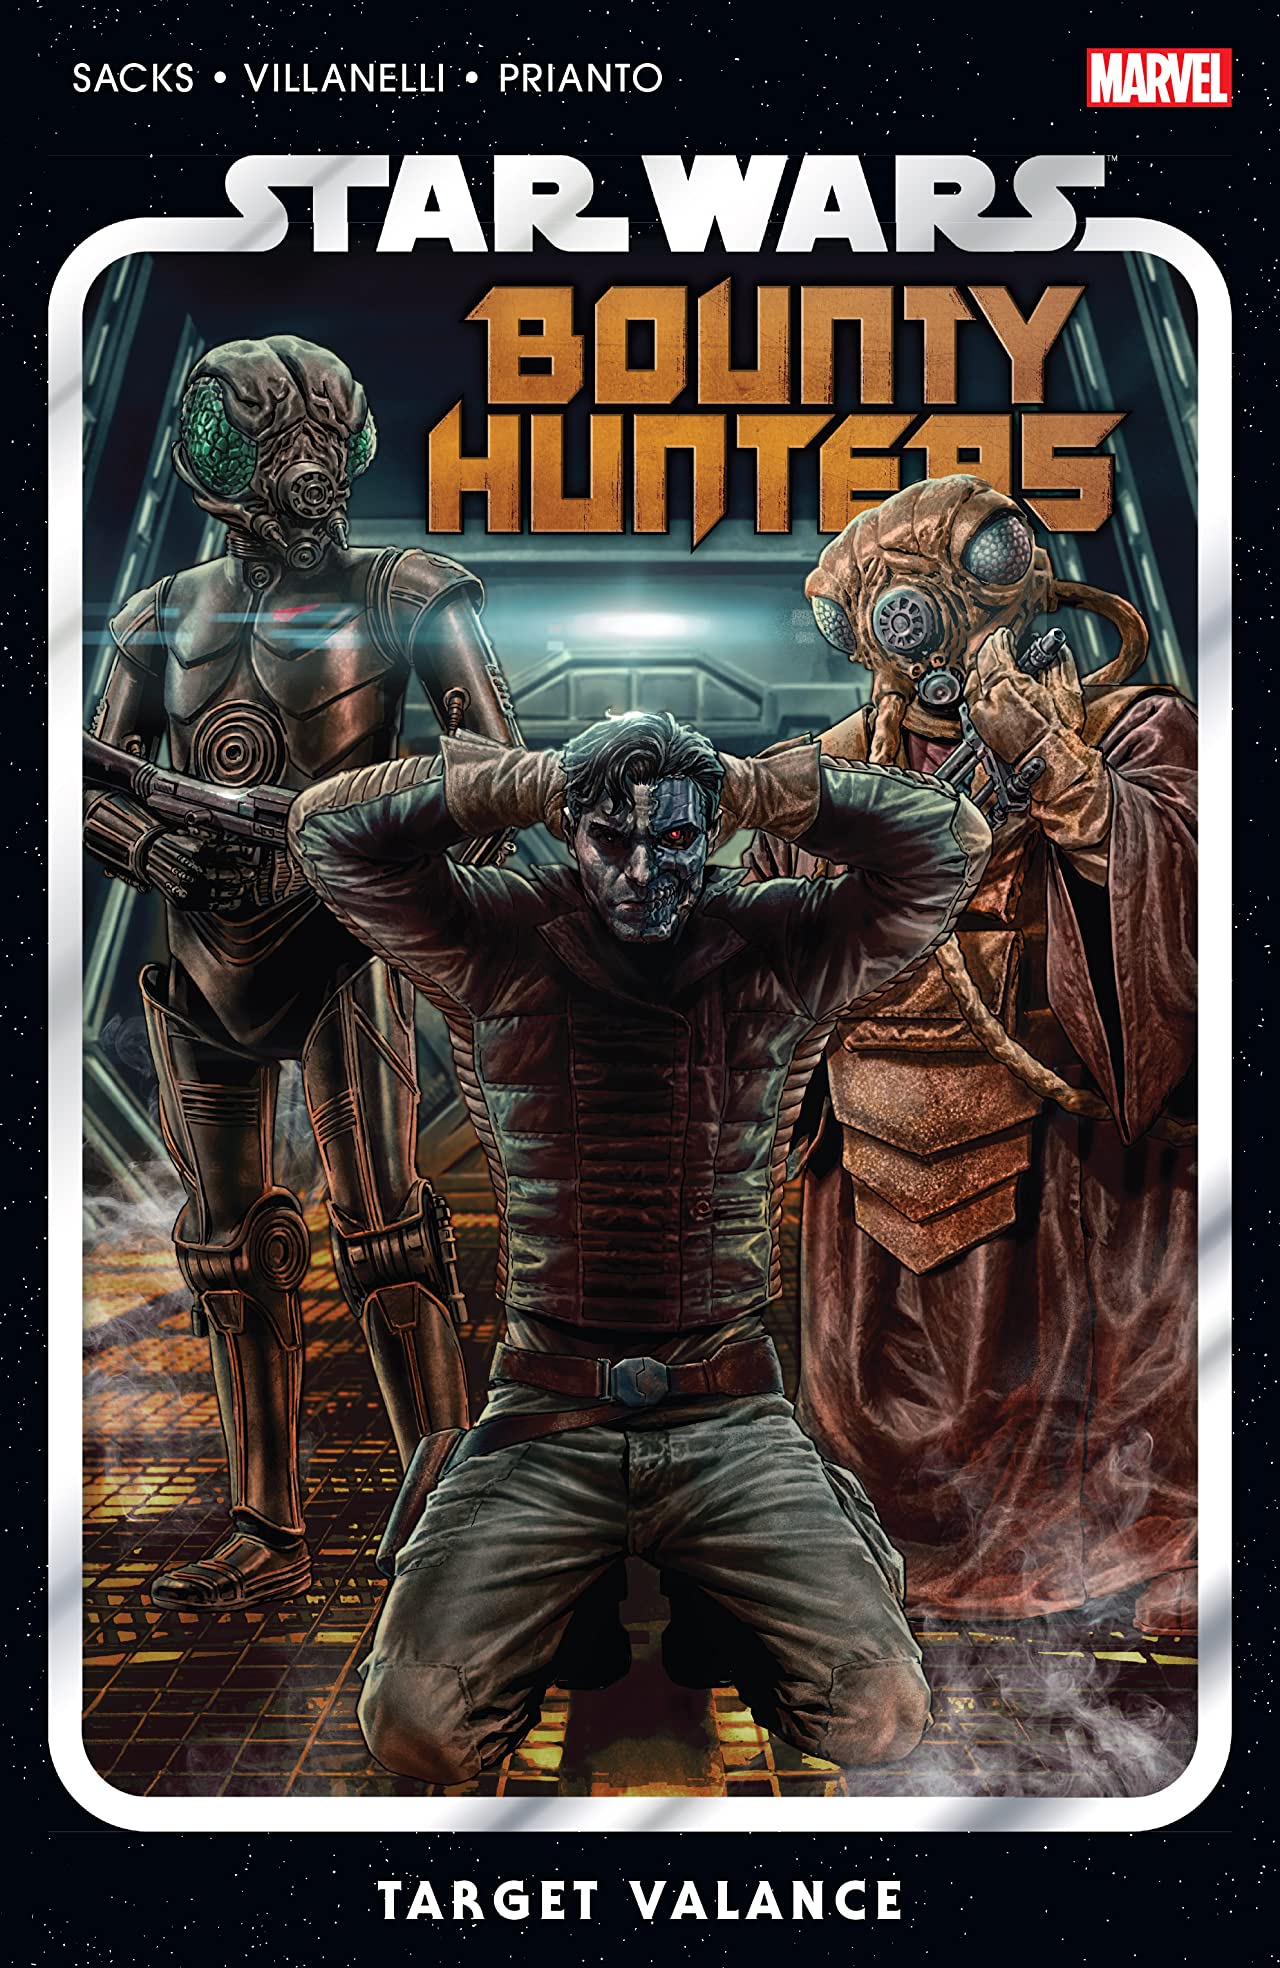 Star Wars: Bounty Hunters Graphic Novel Volume 2 Target Valance